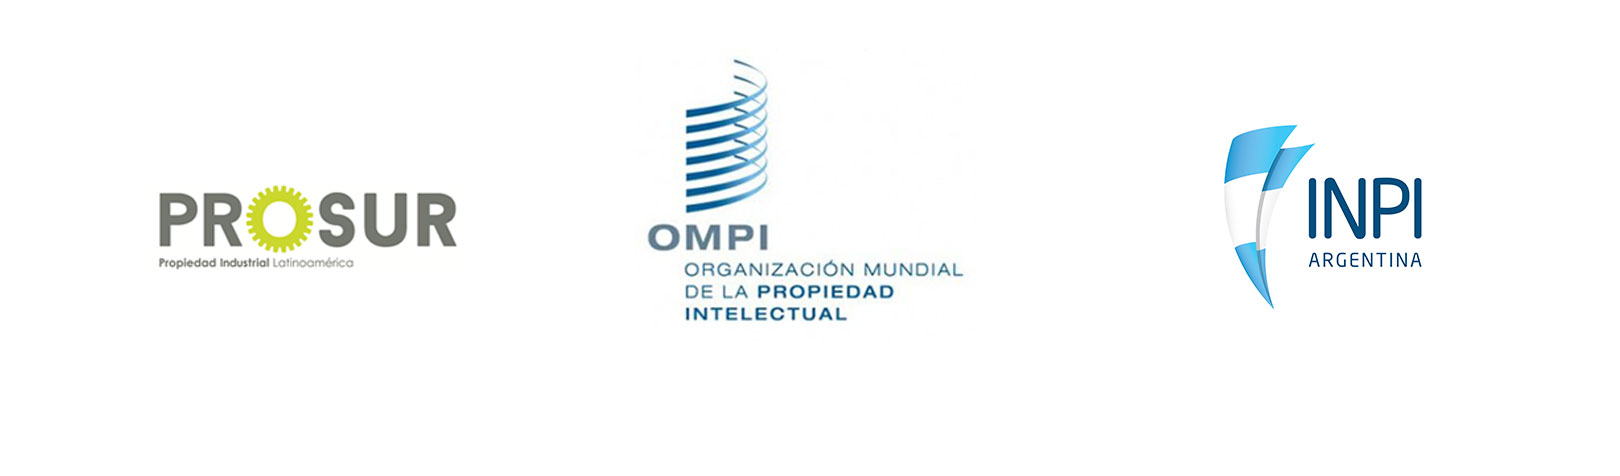 Logo Prosur, logo OMPI, logo INPI